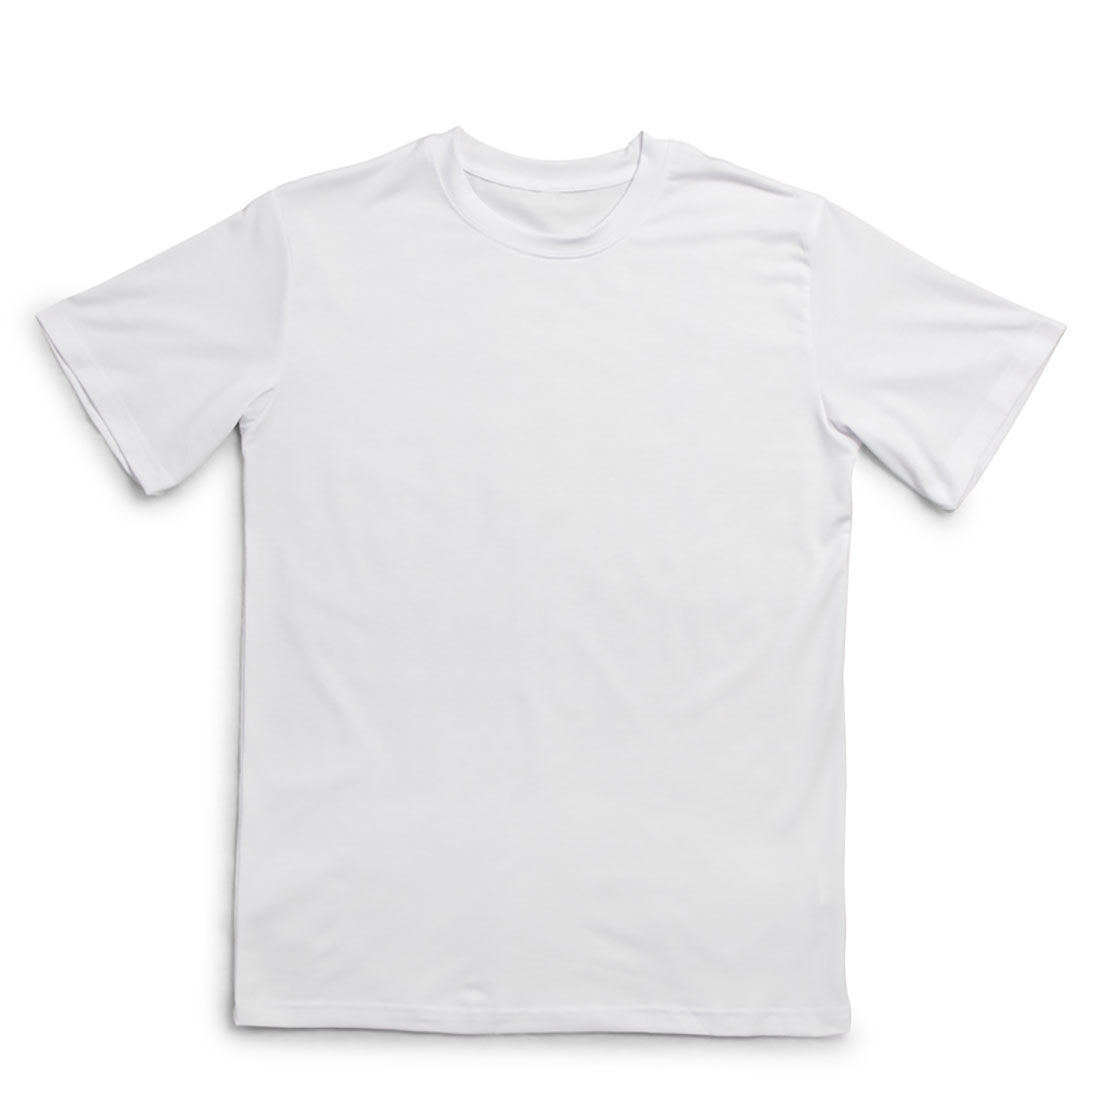 Men's T -Shirt Blank, Crew Neck | Cricut Shop